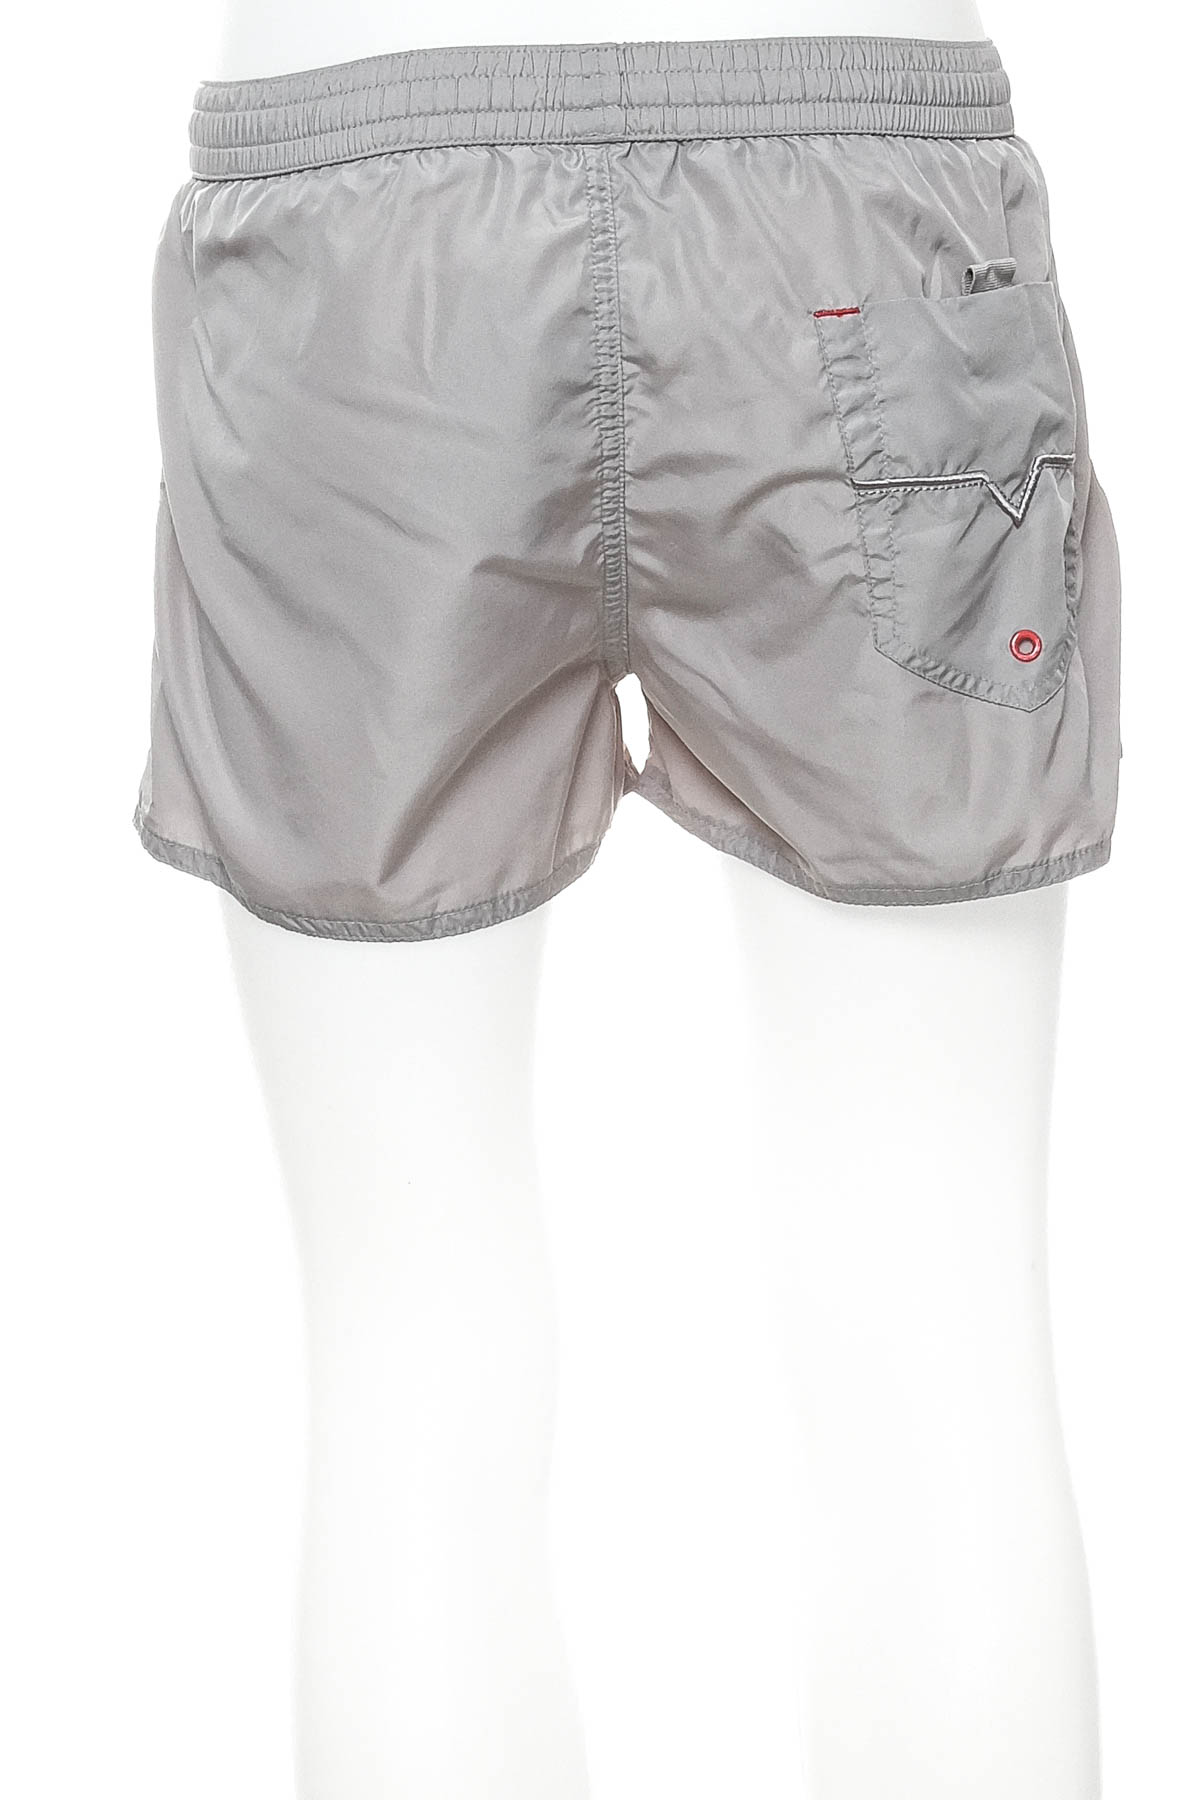 Men's shorts - DIESEL - 1